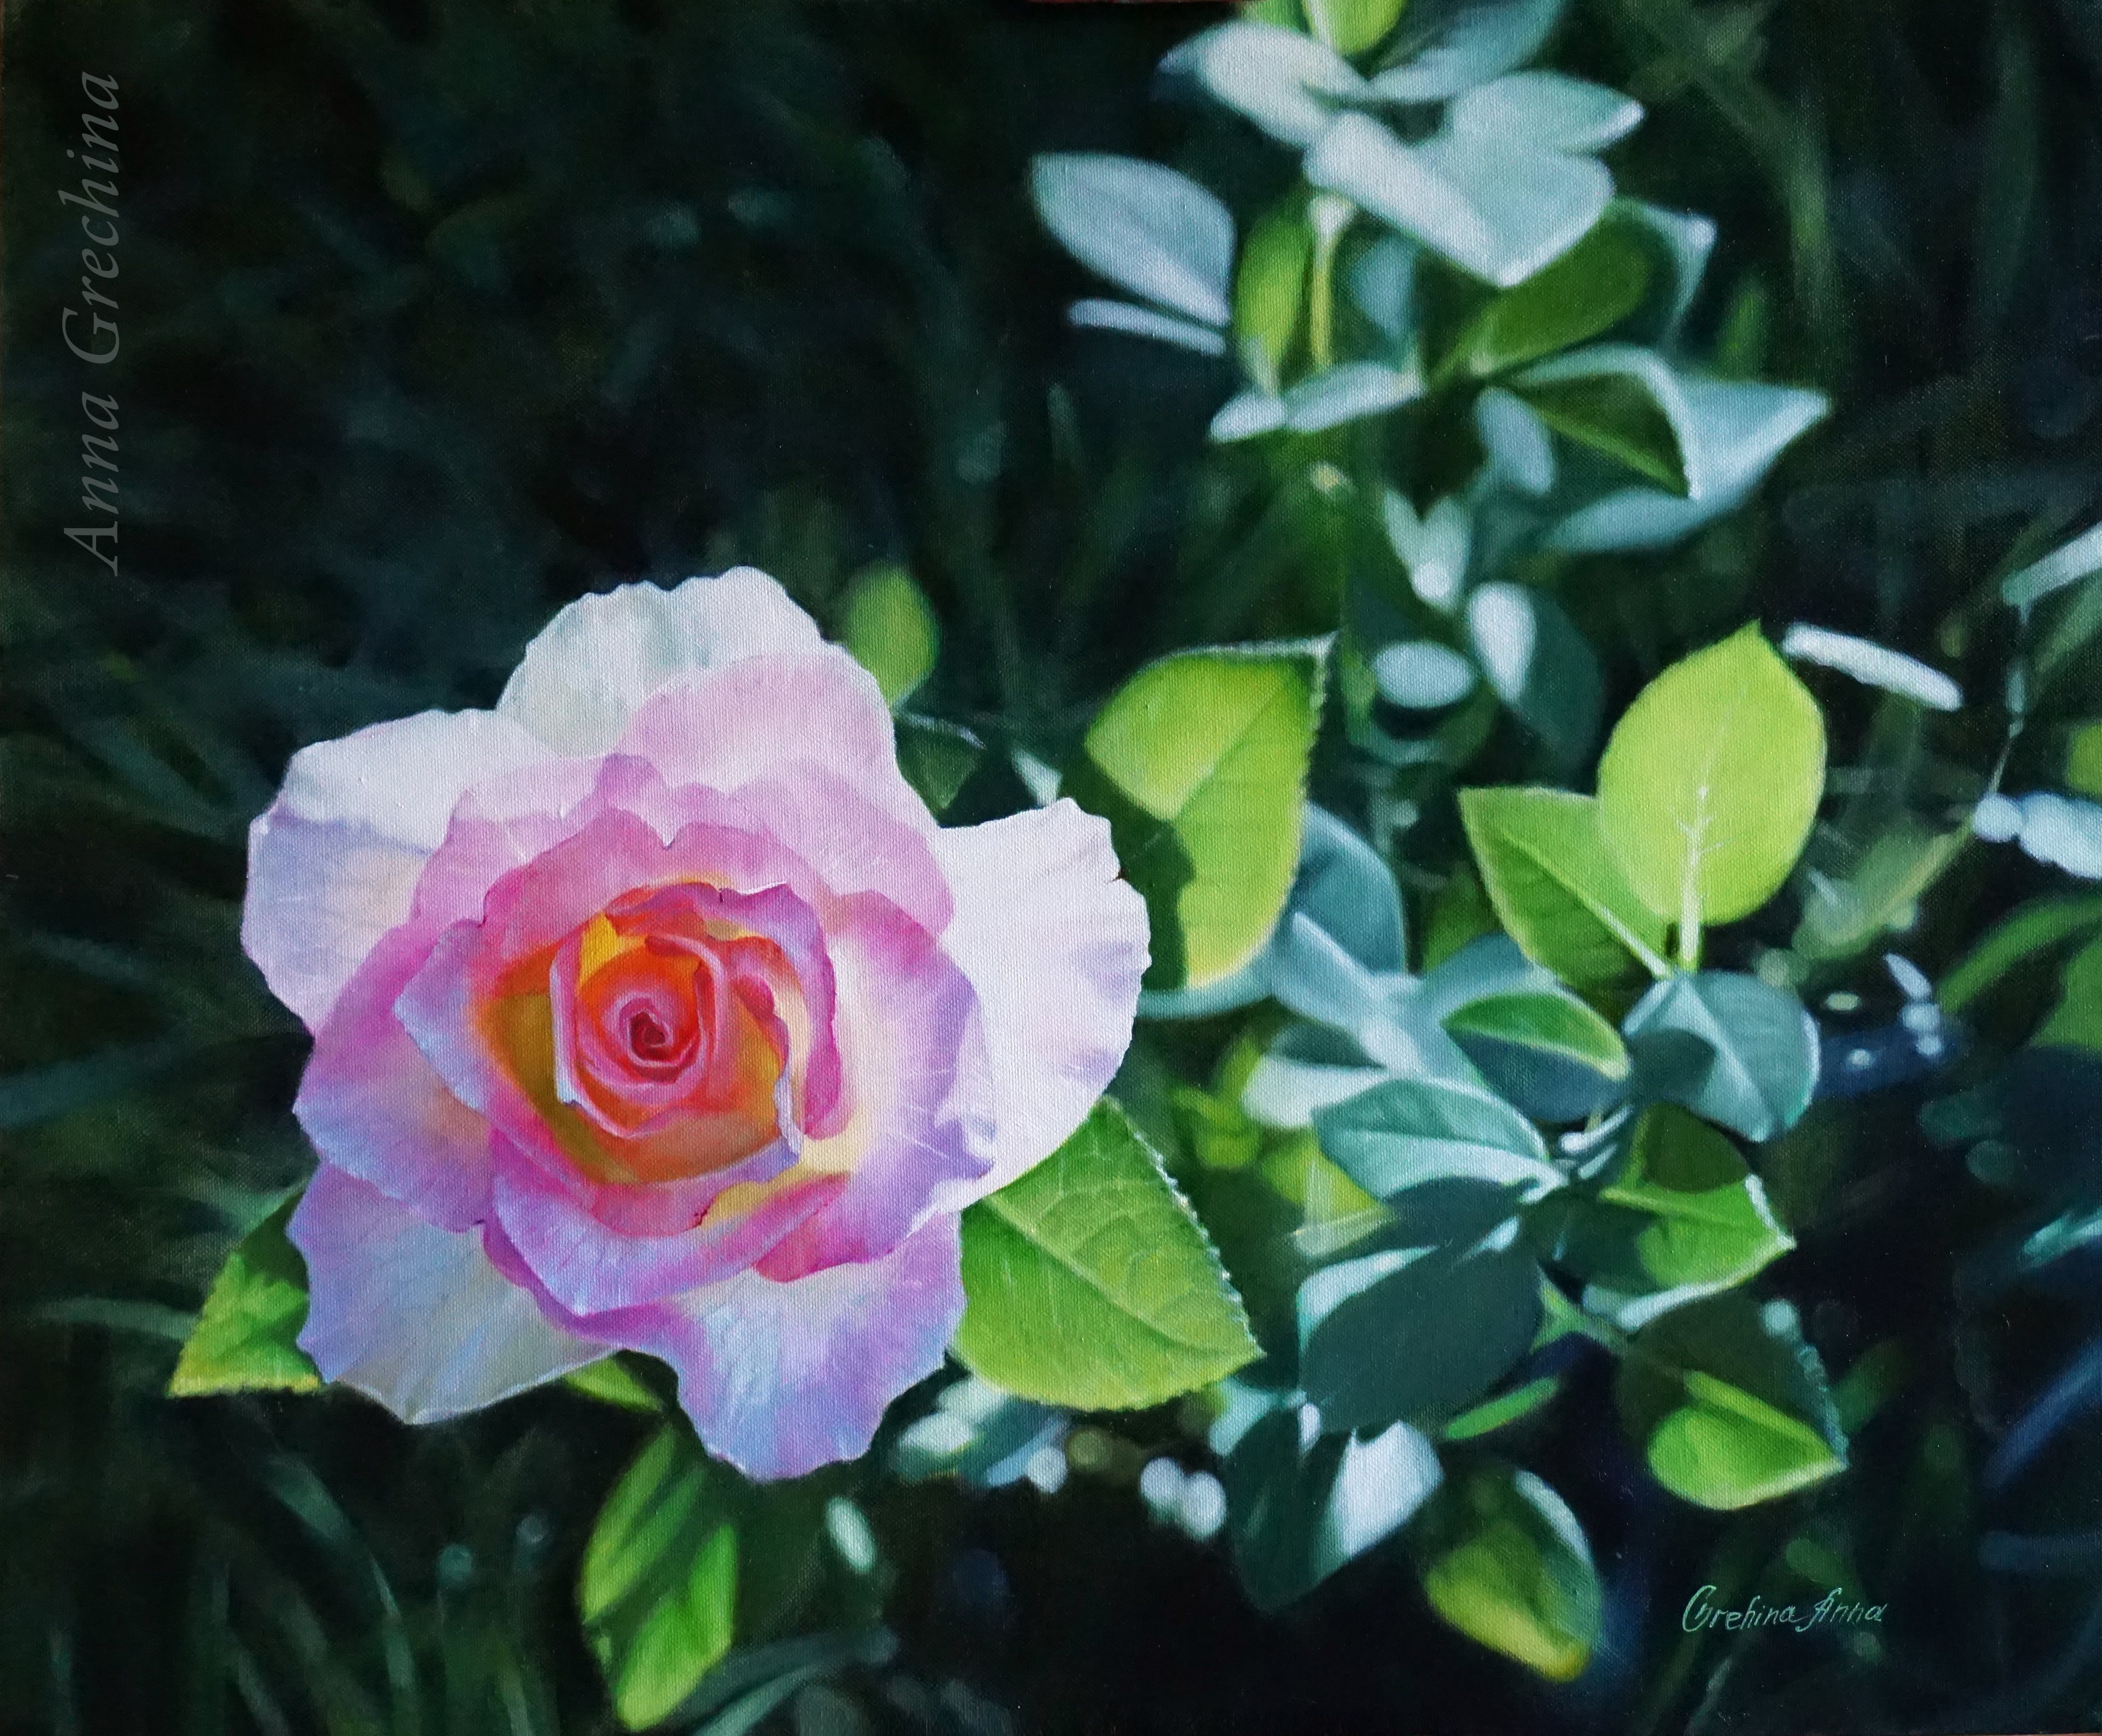 Натюрморт с розой в саду. Живопись, фотореализм. Хфудожник Гречина Анна.